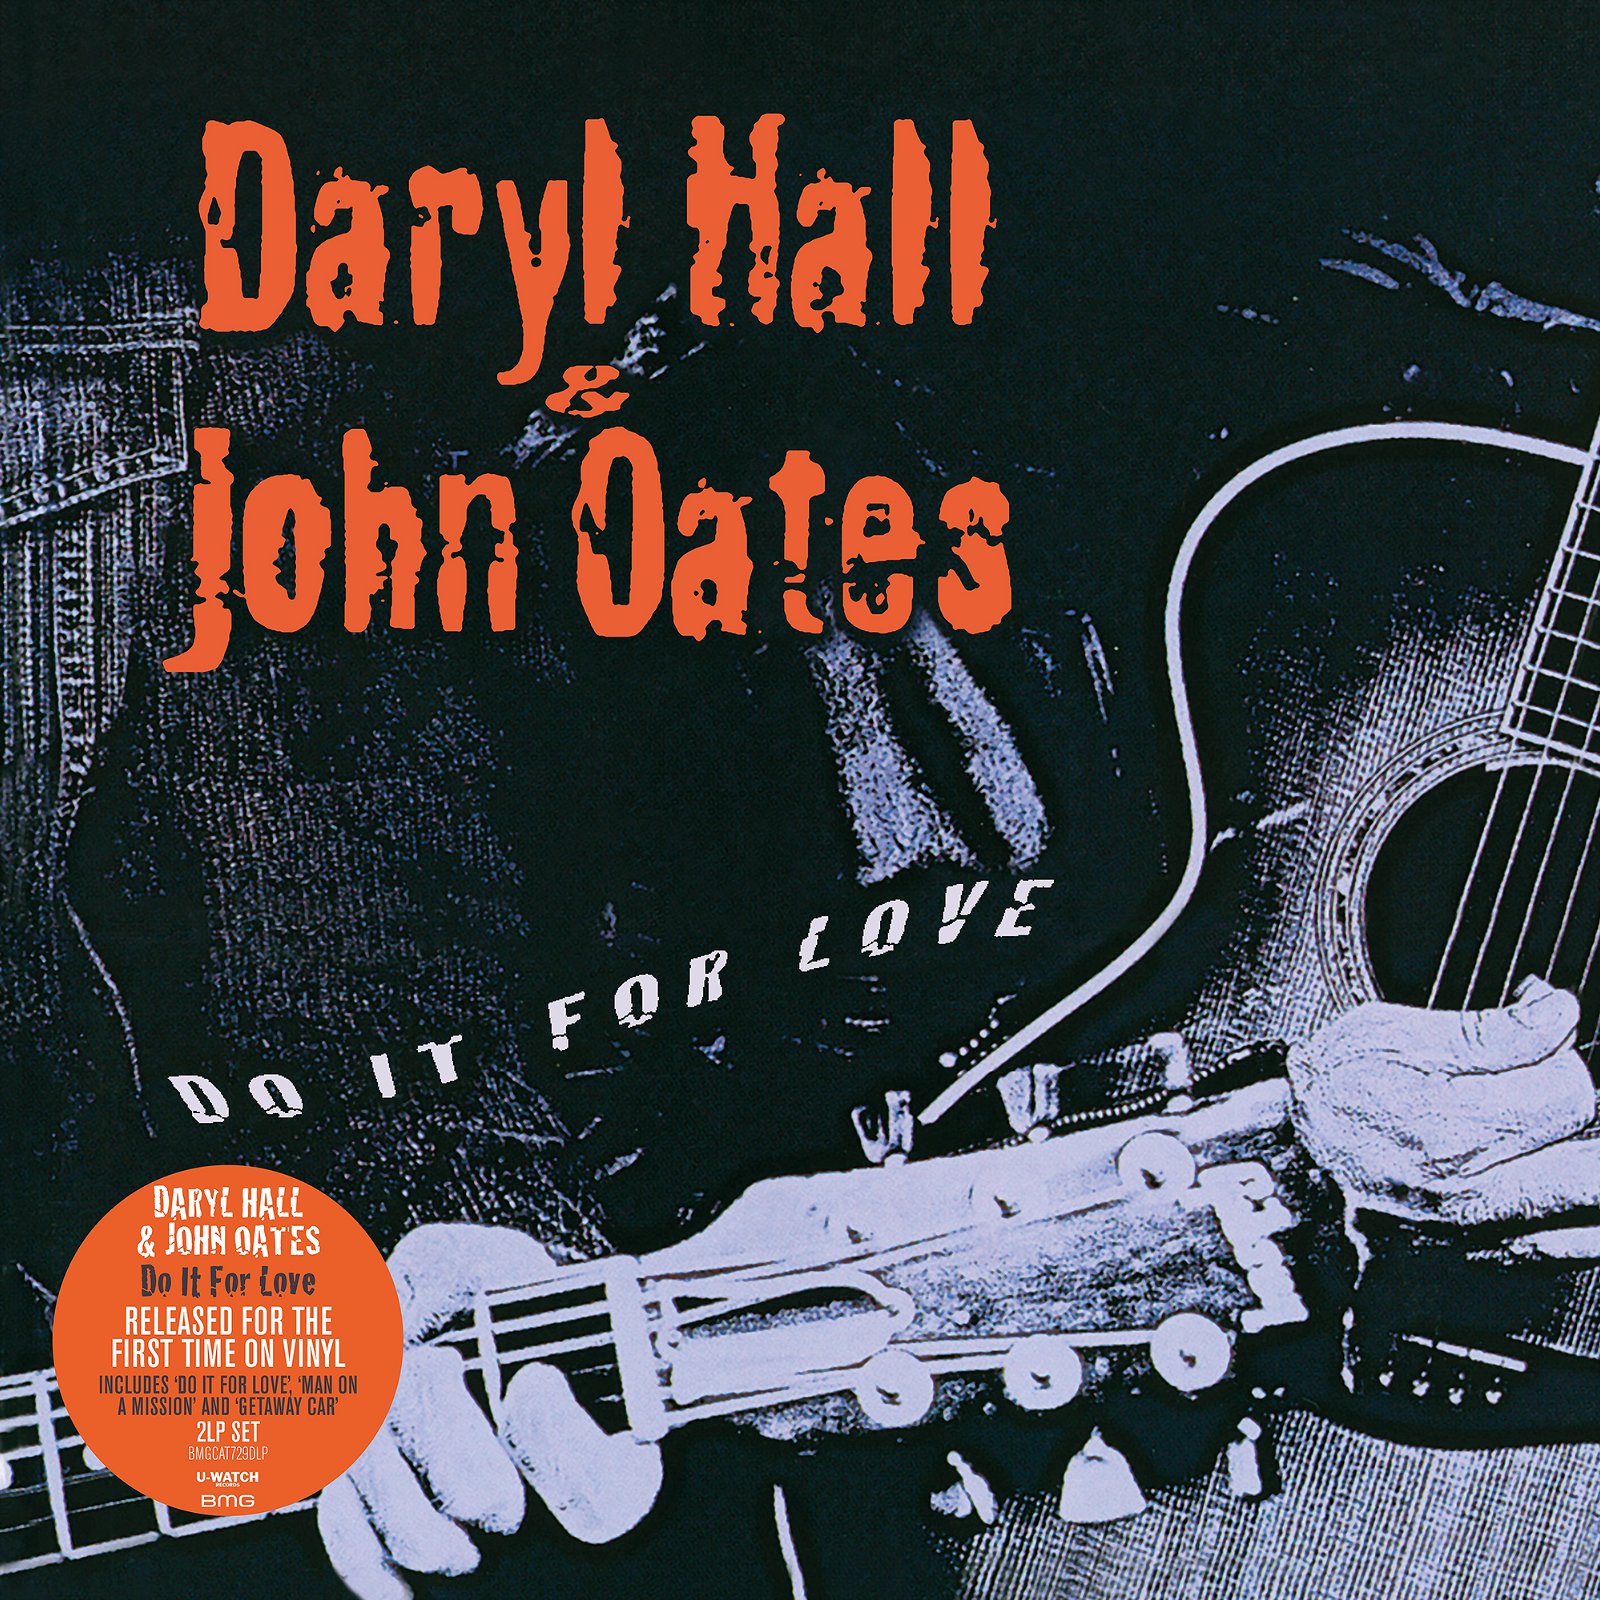 HALL, DARYL & OATES, JOHN - DO IT FOR LOVE, Vinyl